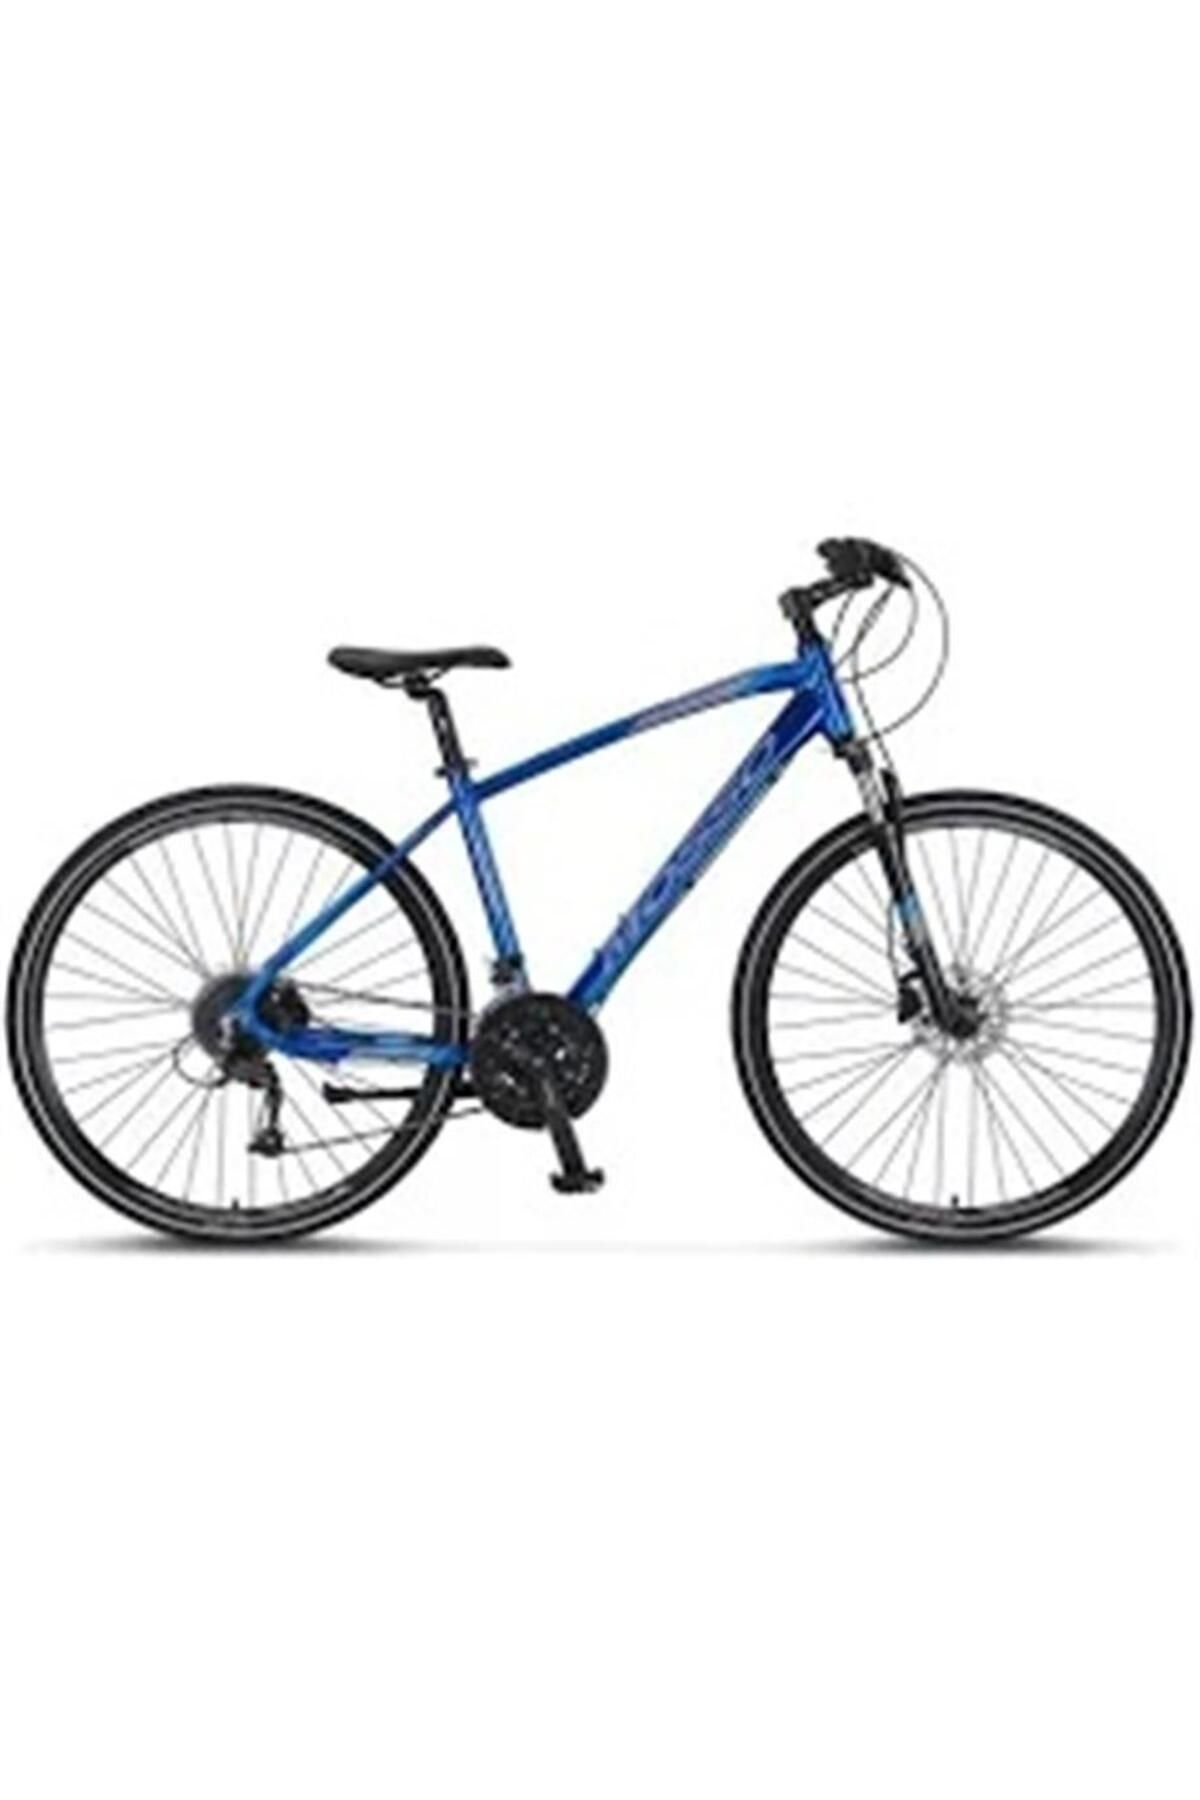 Mosso Legarda-2321-msm-h Erkek Şehir Bisikleti 410h Hd 28 Jant 21 Vites Lacivert Mavi